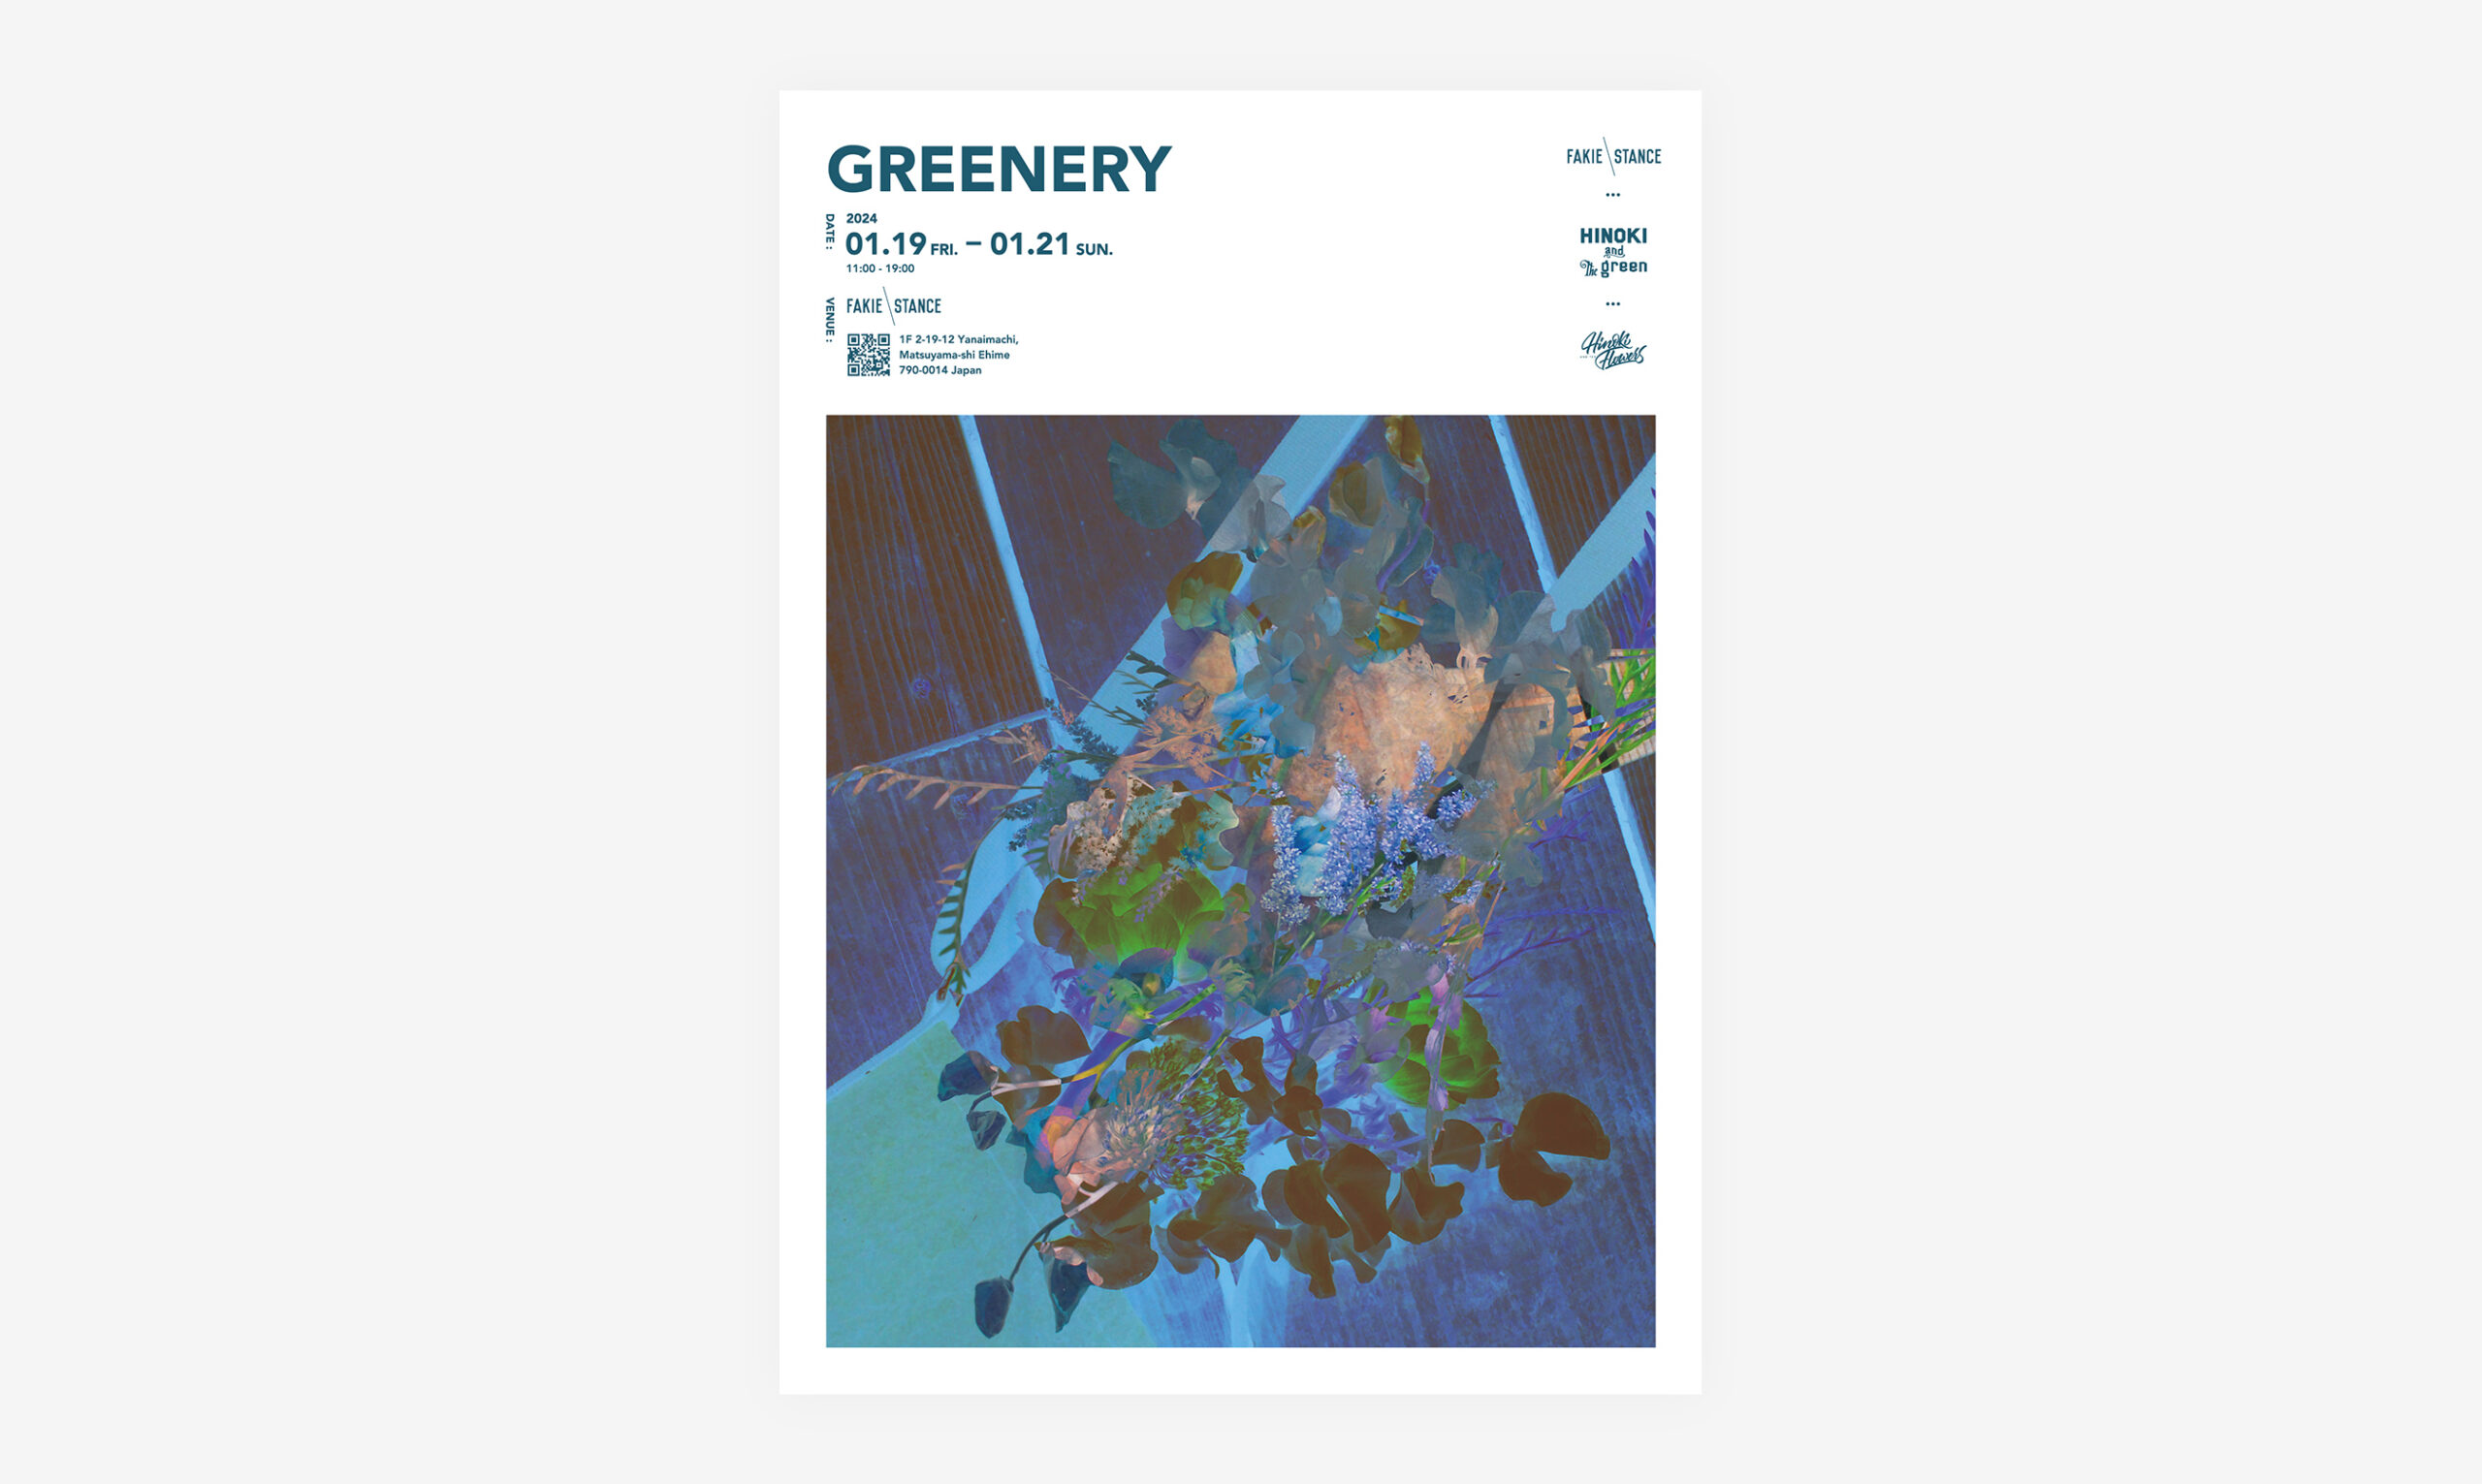 GREENERY #03 : GRAPHICS